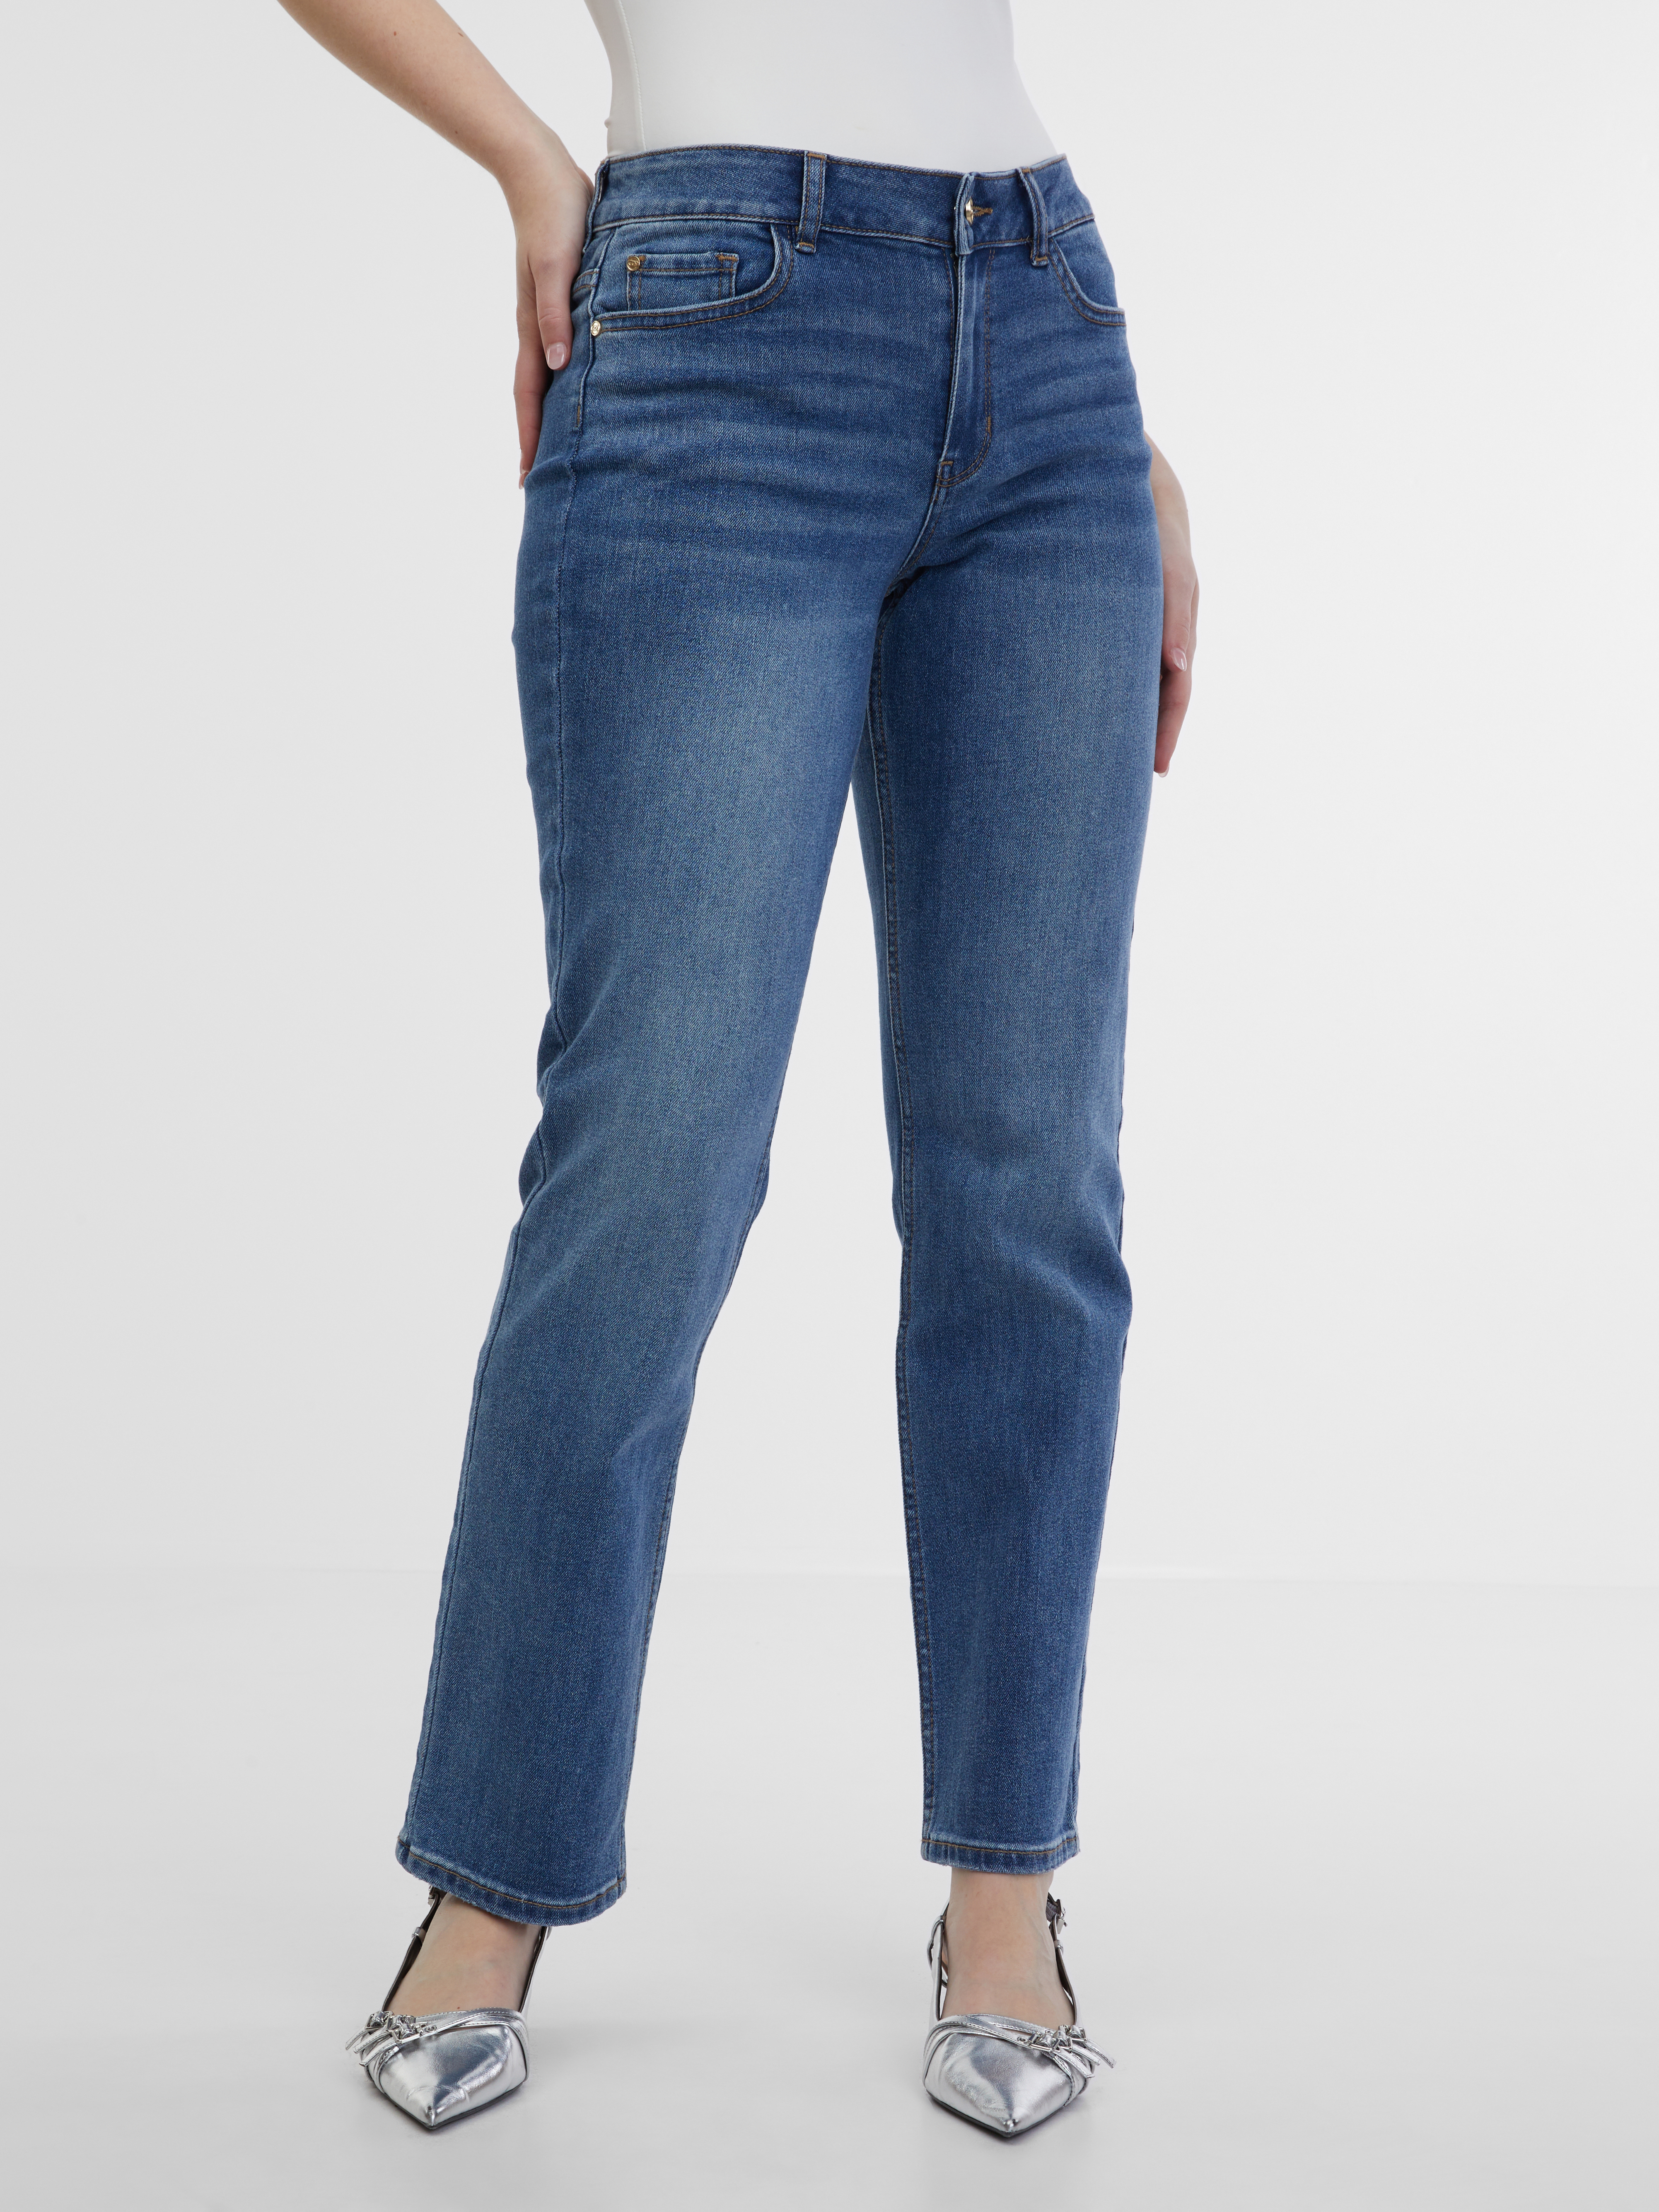 Orsay Blue Women's Flared Fit Jeans - Women's